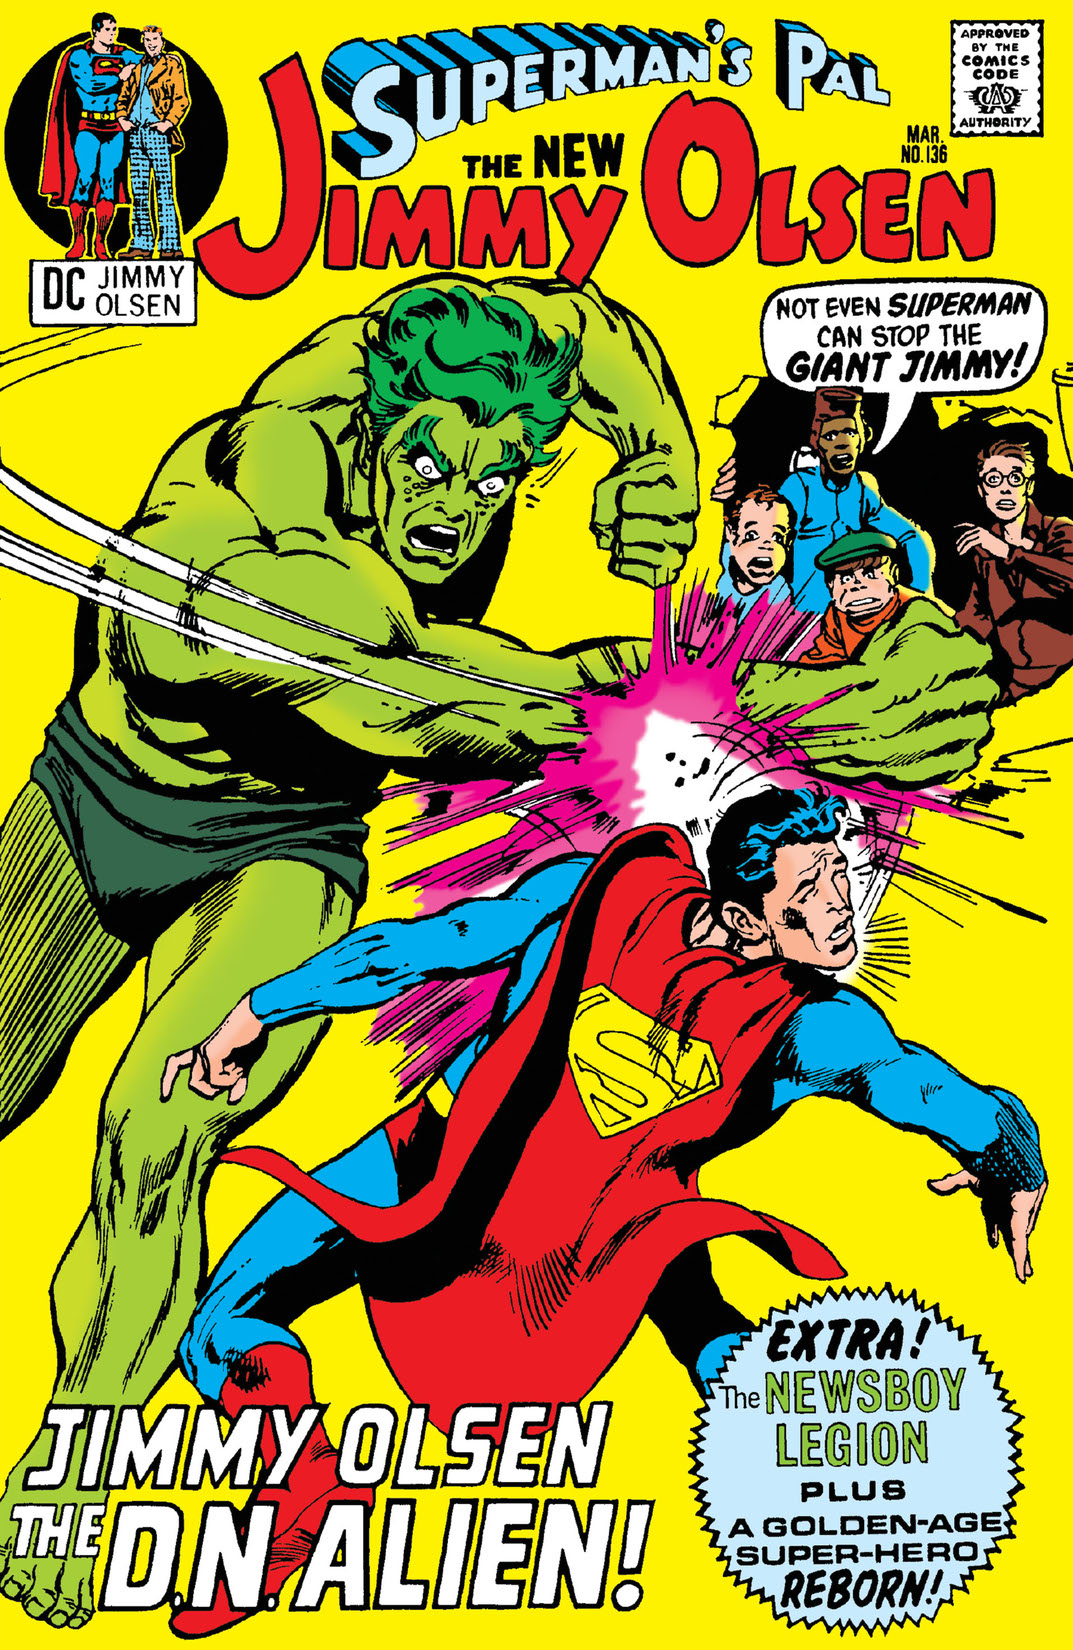 Superman's Pal, Jimmy Olsen #136 preview images